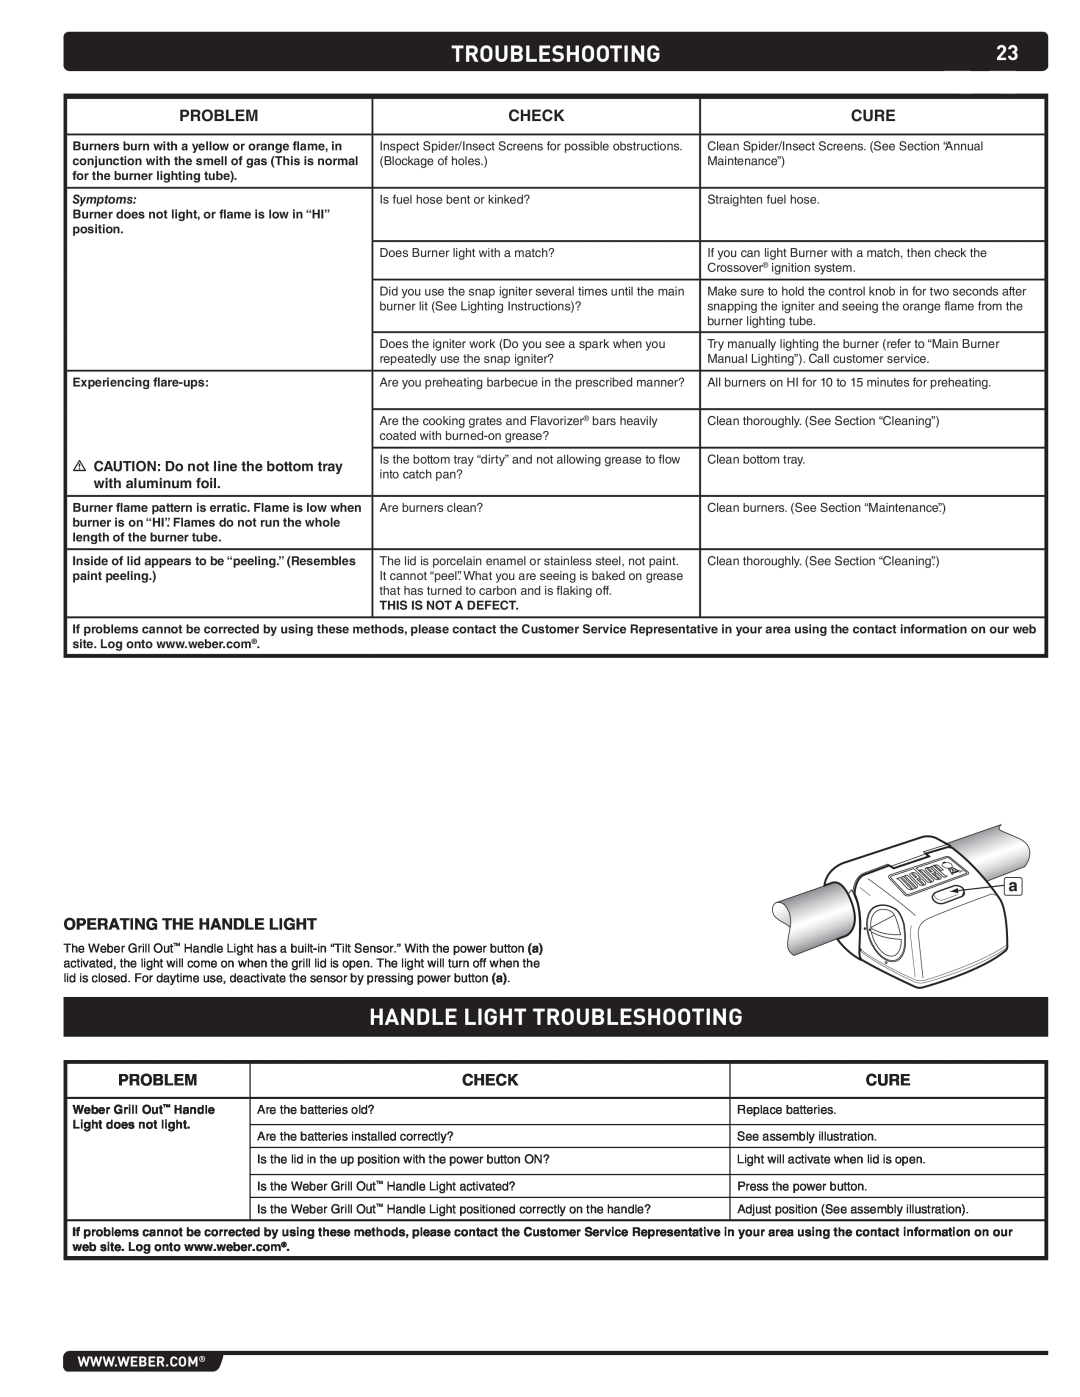 Weber S-460 manual handle light Troubleshooting, Symptoms 